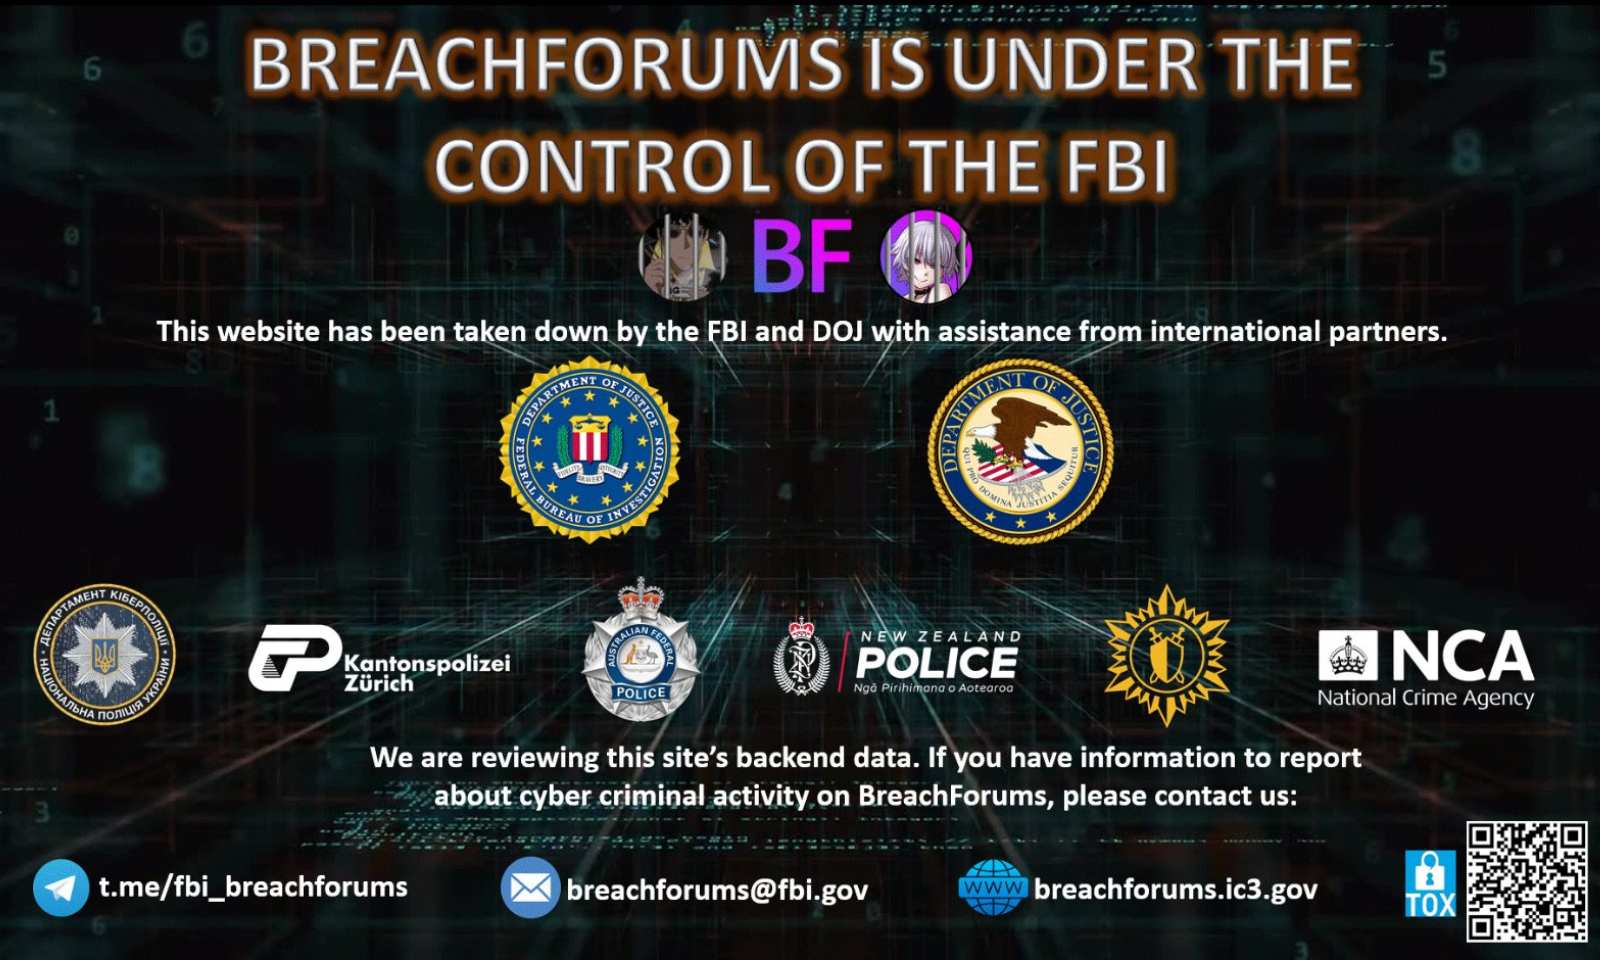 FBI Shuts Down Major Hacking Forum: Inside the Dramatic Seizure of BreachForums